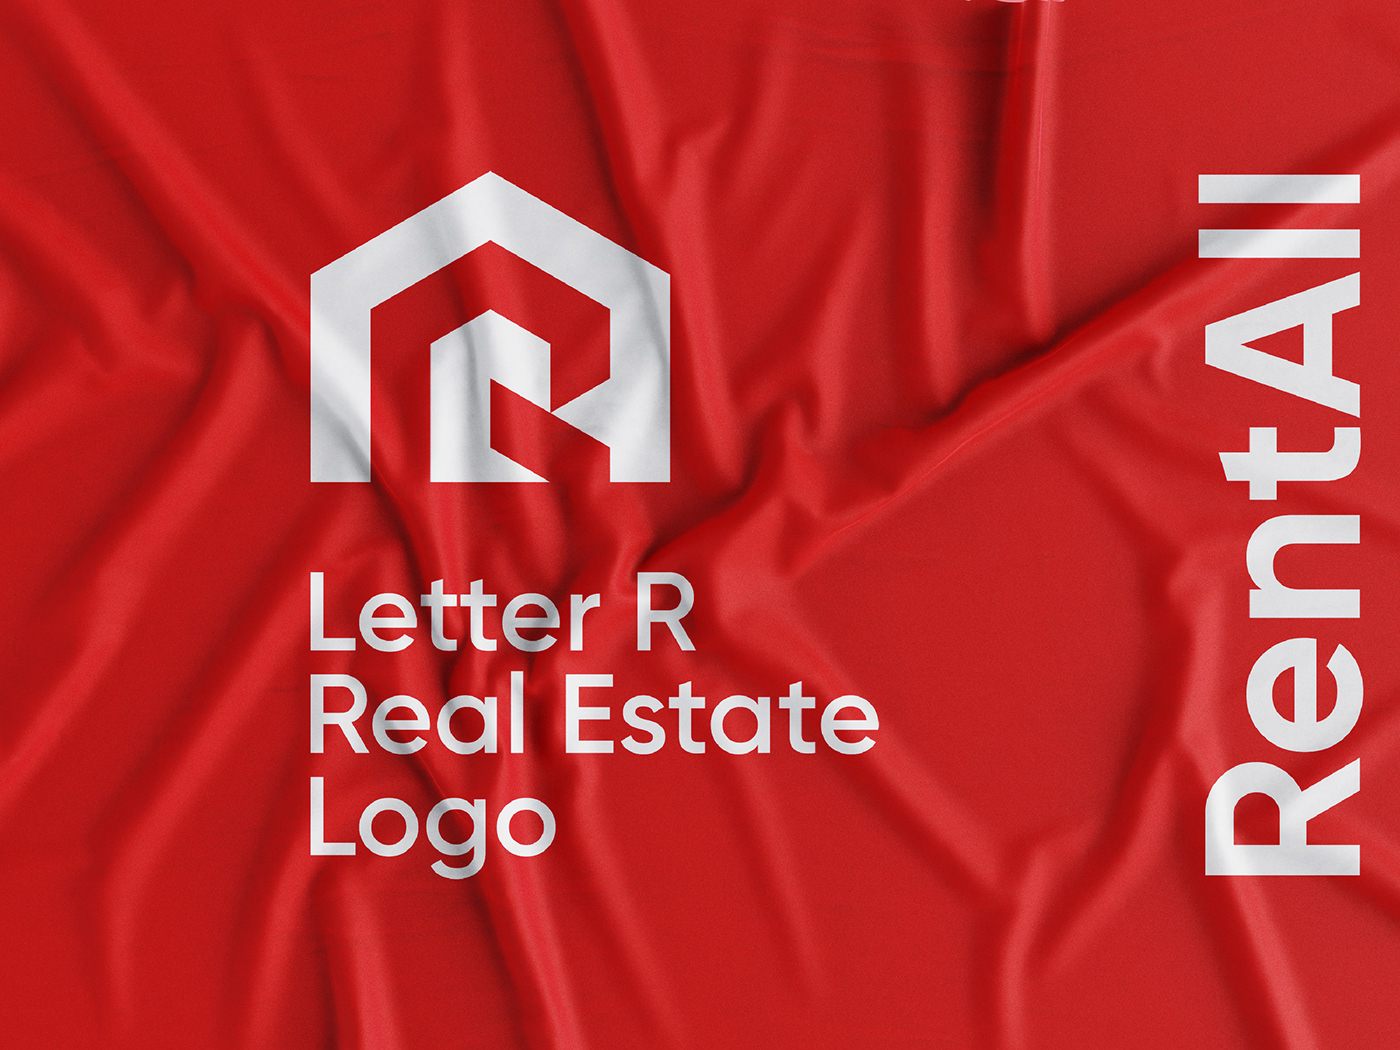 Brand Design brand identity letter logo Real estate logo visual identity